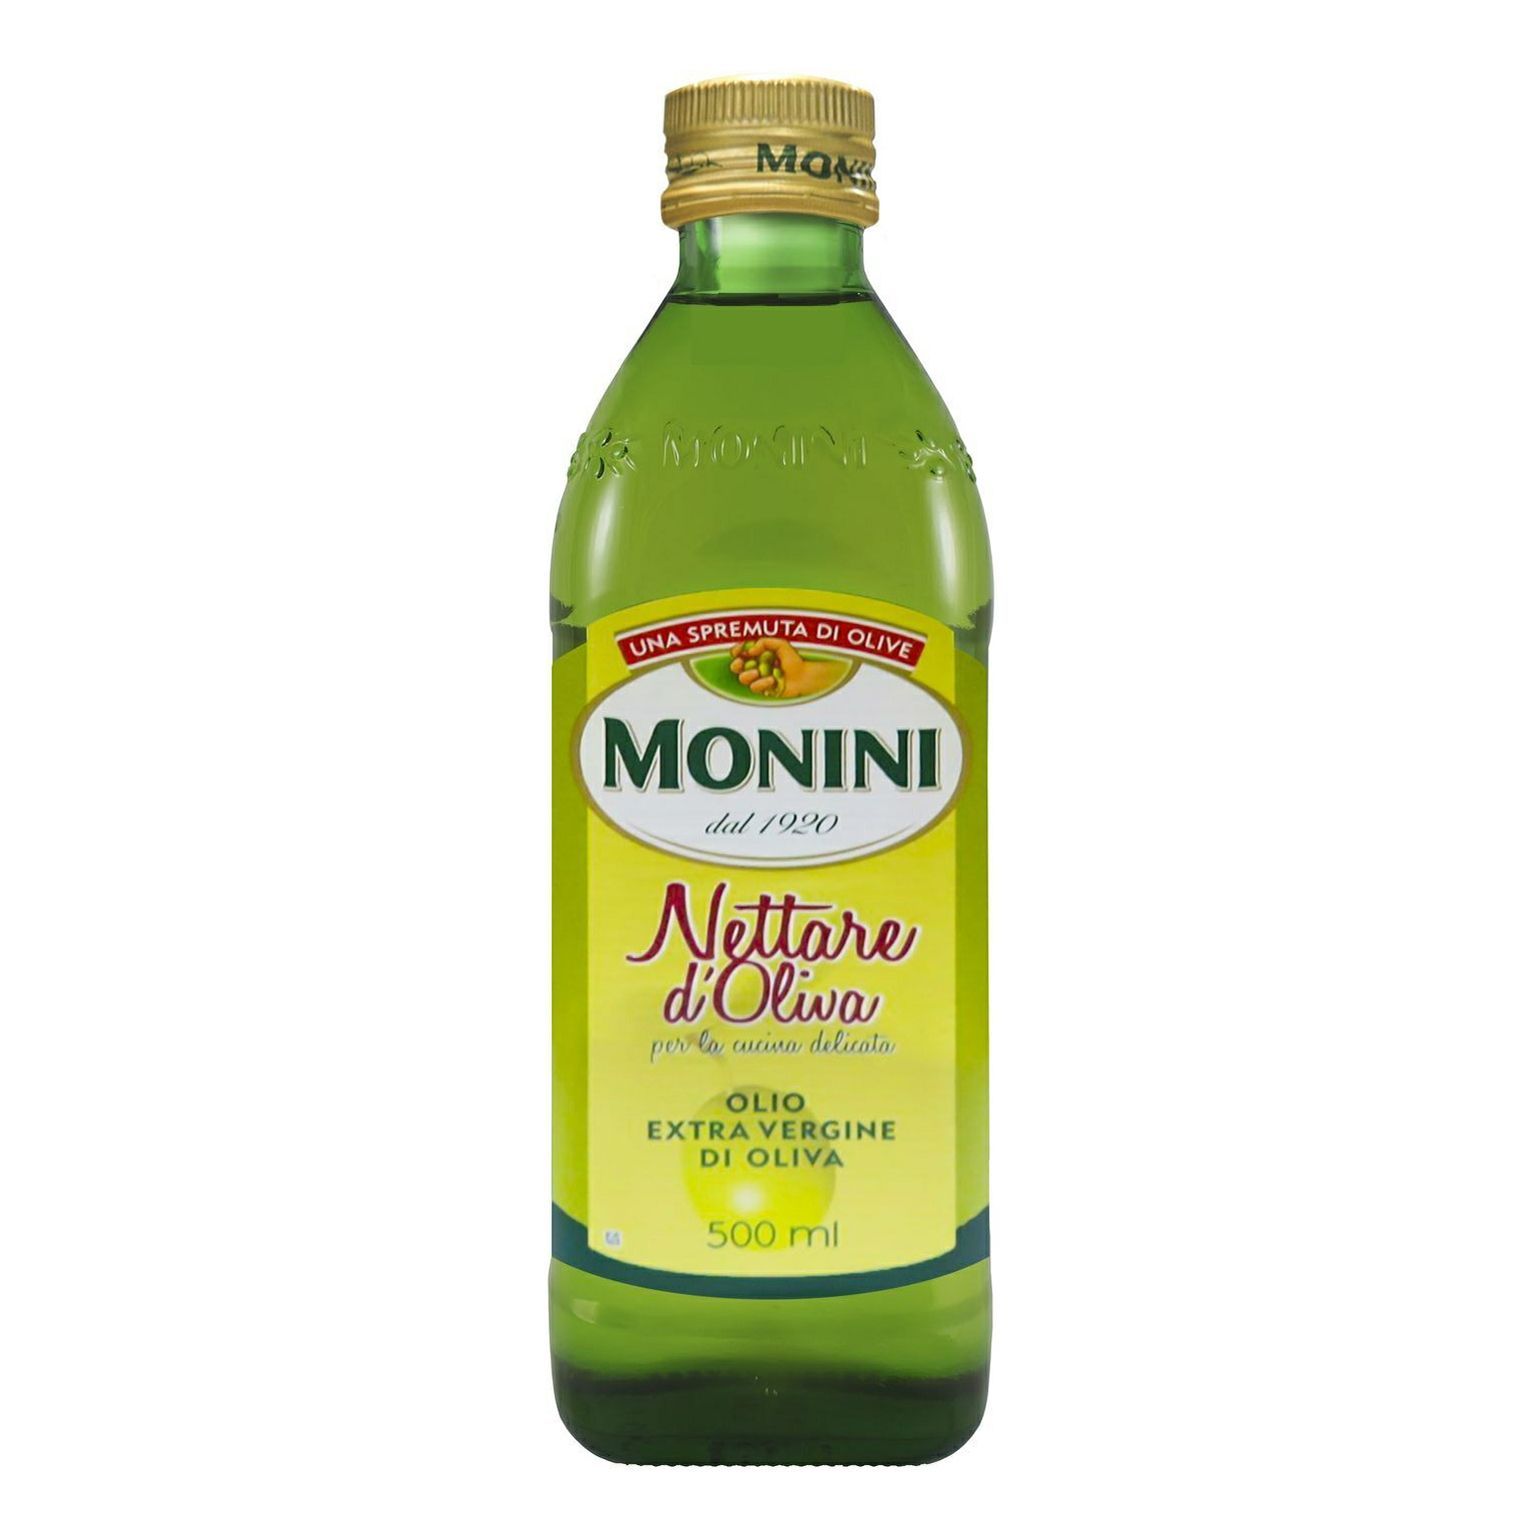 Оливковое масло монини купить. Монини 500мл масло. Monini оливковое масло 500. Оливковое масло Монини Классик 500 мл. Масло оливковое Monini высшего качества д/жарки стекло 1л.